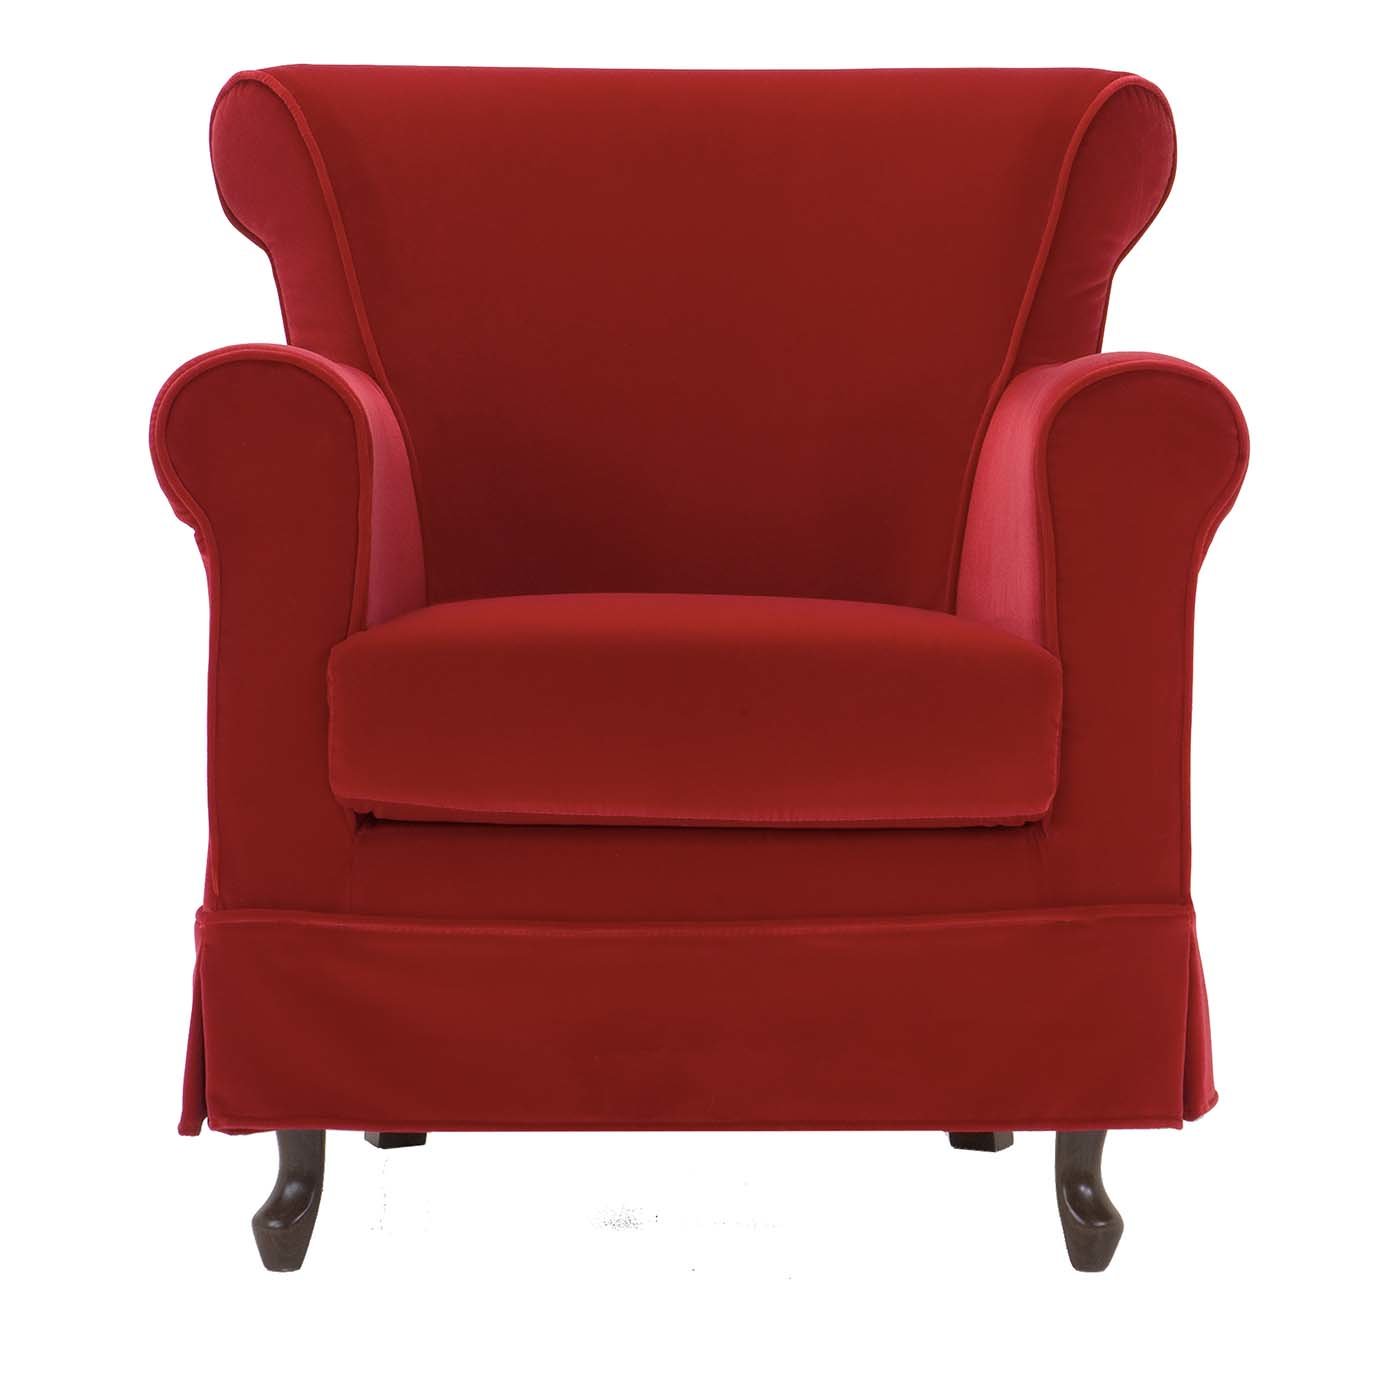 070 Roter Sessel - Hauptansicht